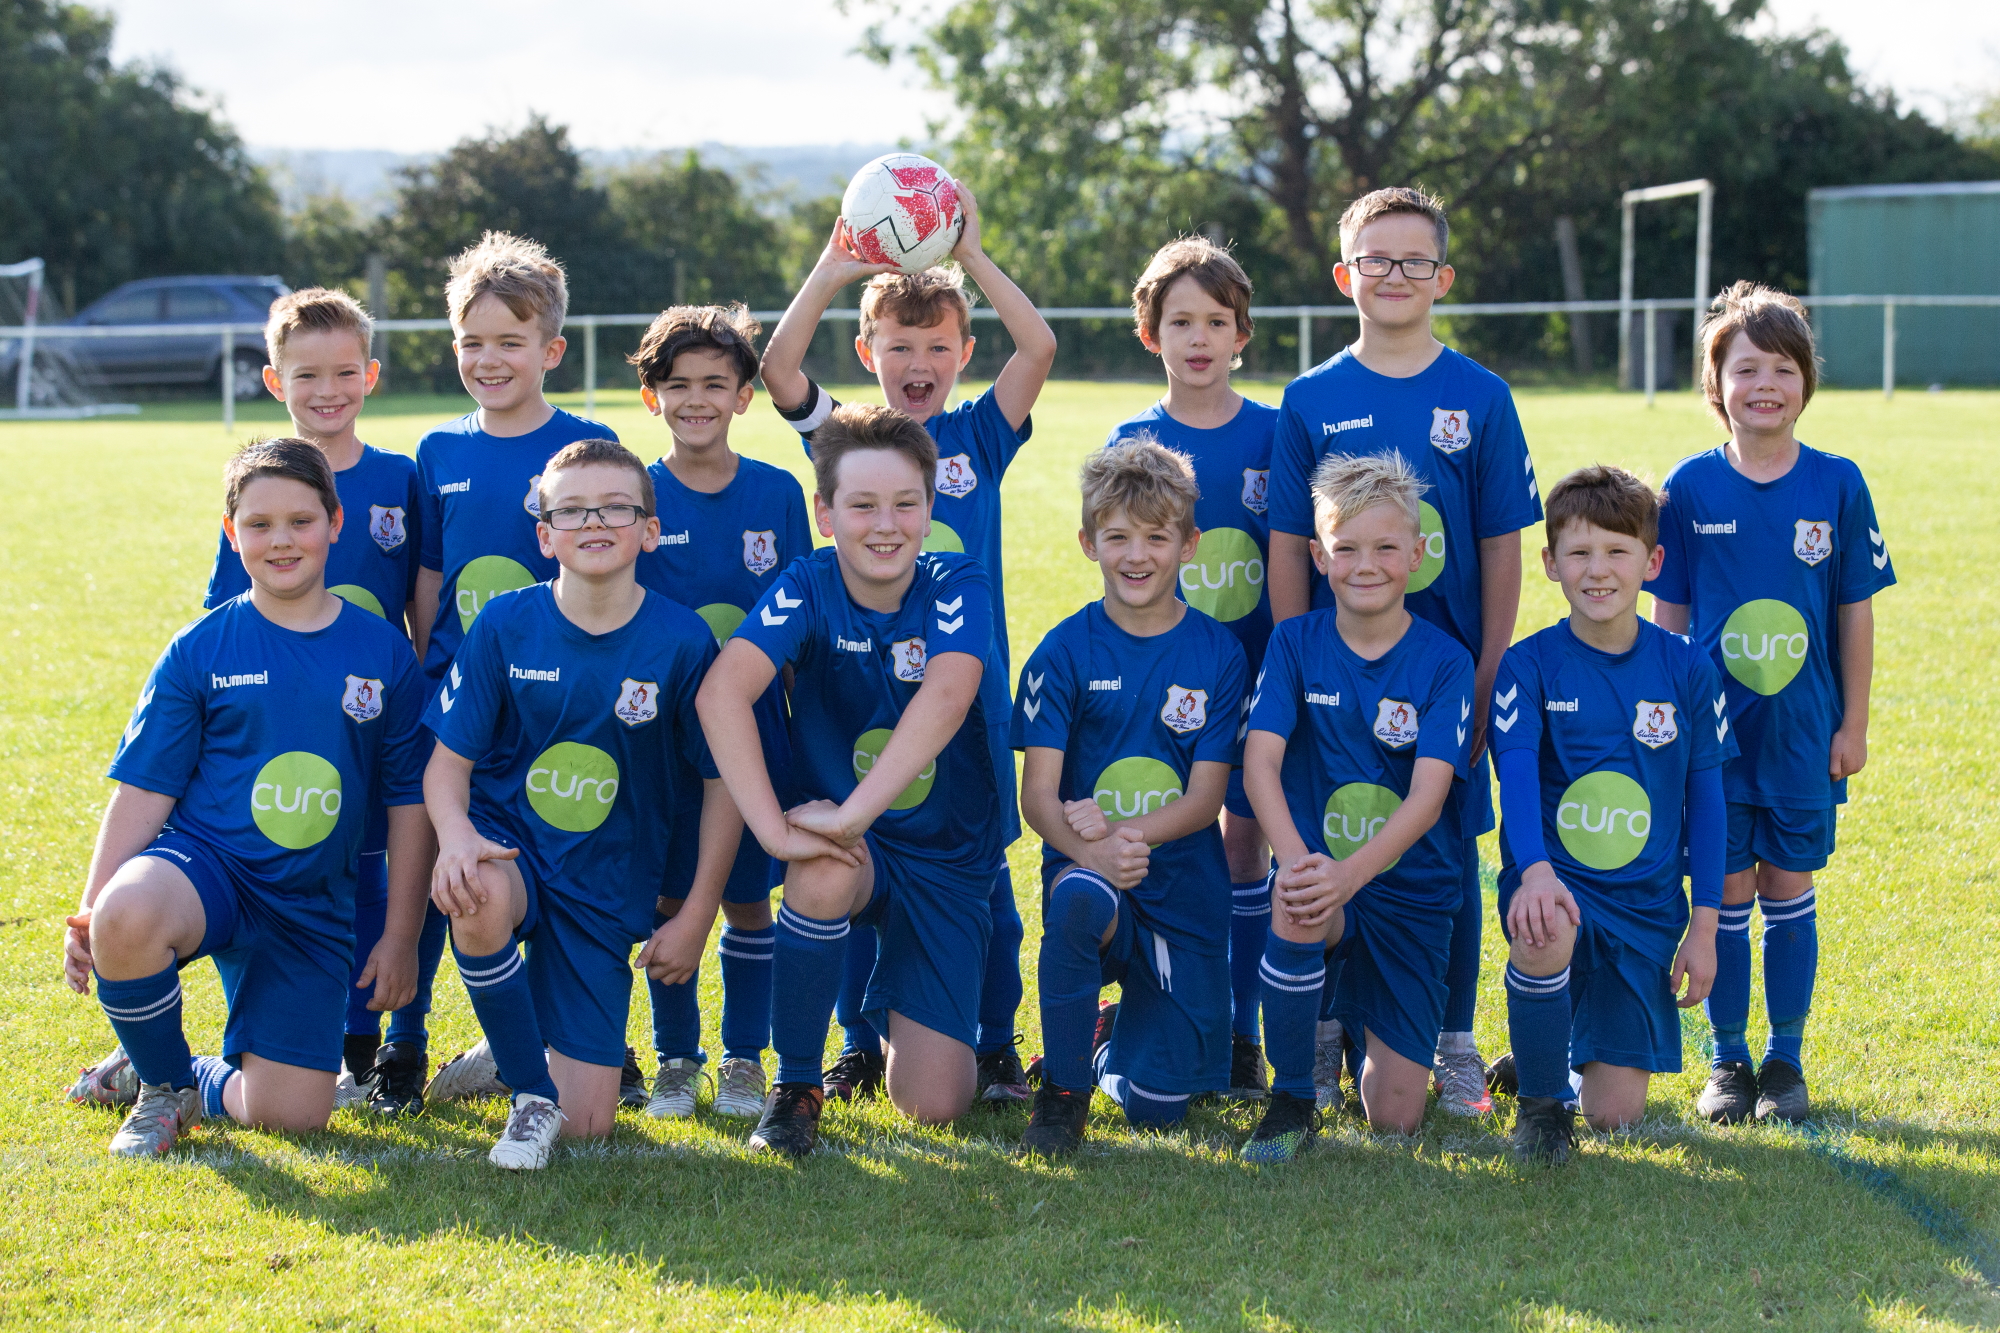 Youth football teams sport new strip thanks to Curo sponsorship